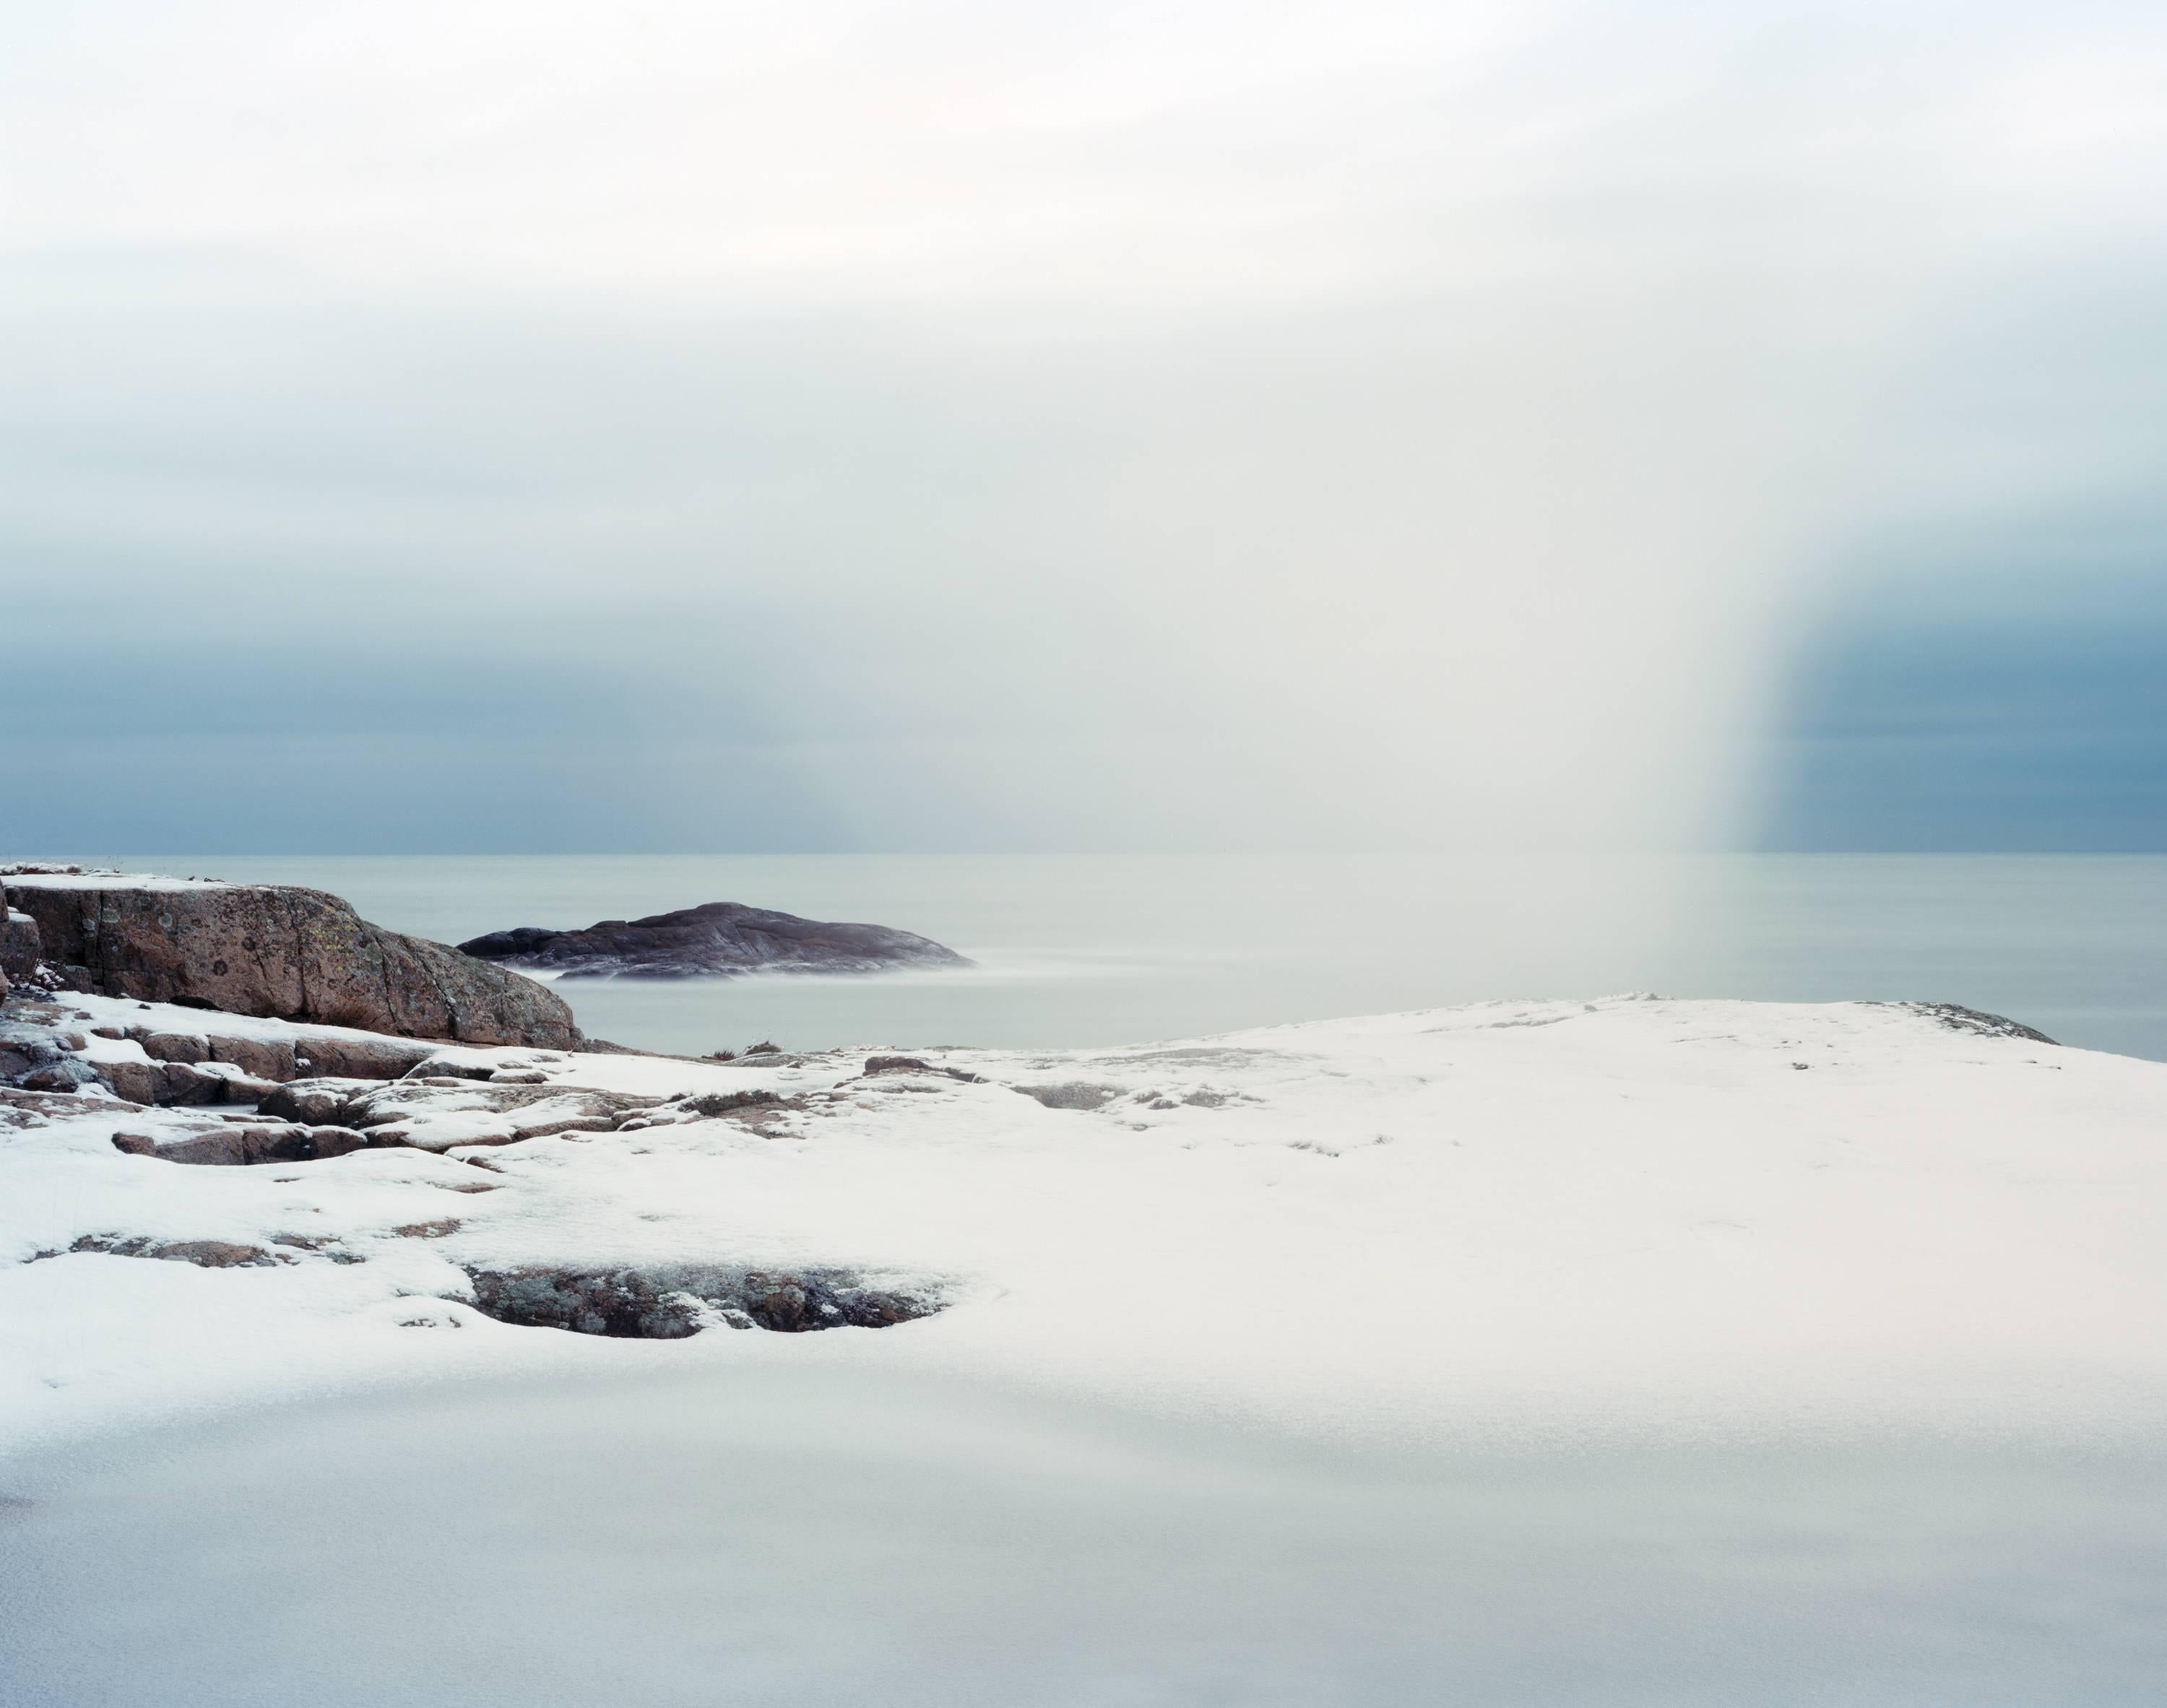 Ole Brodersen Landscape Photograph - String, Cloth, and Kite 02 - large blue Scandinavian winter snow landscape